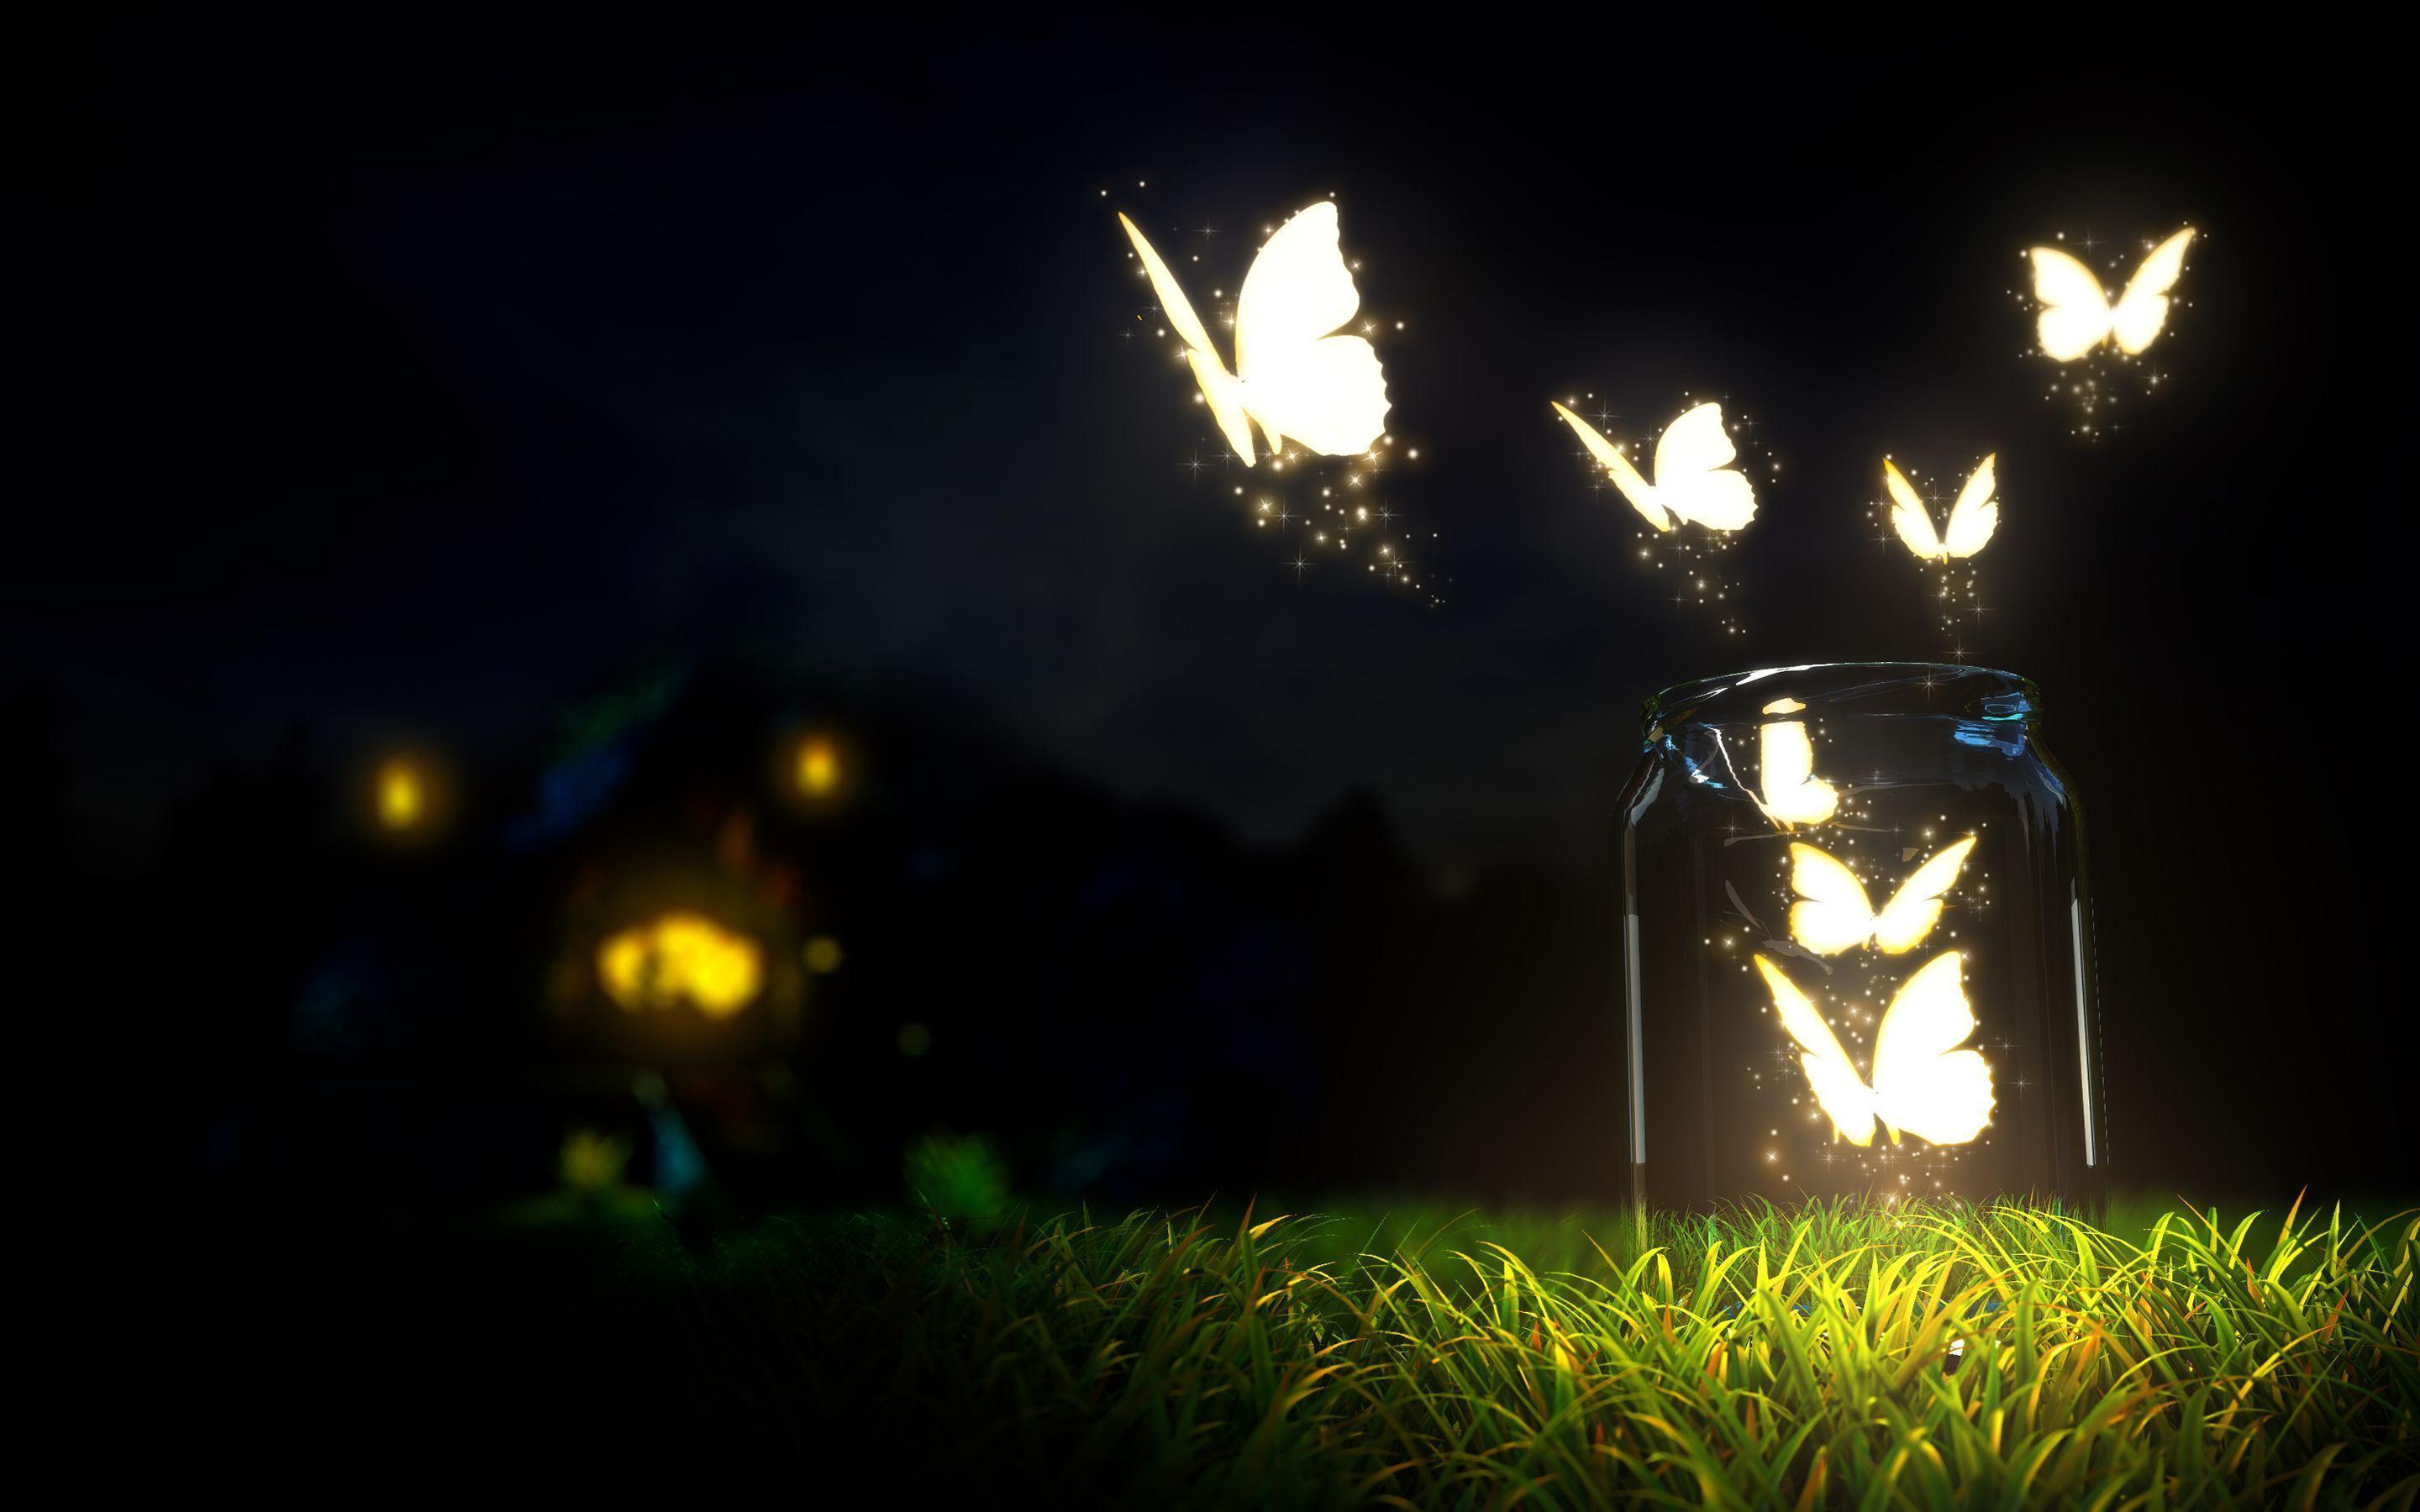 Glowing butterflies art Wallpaper